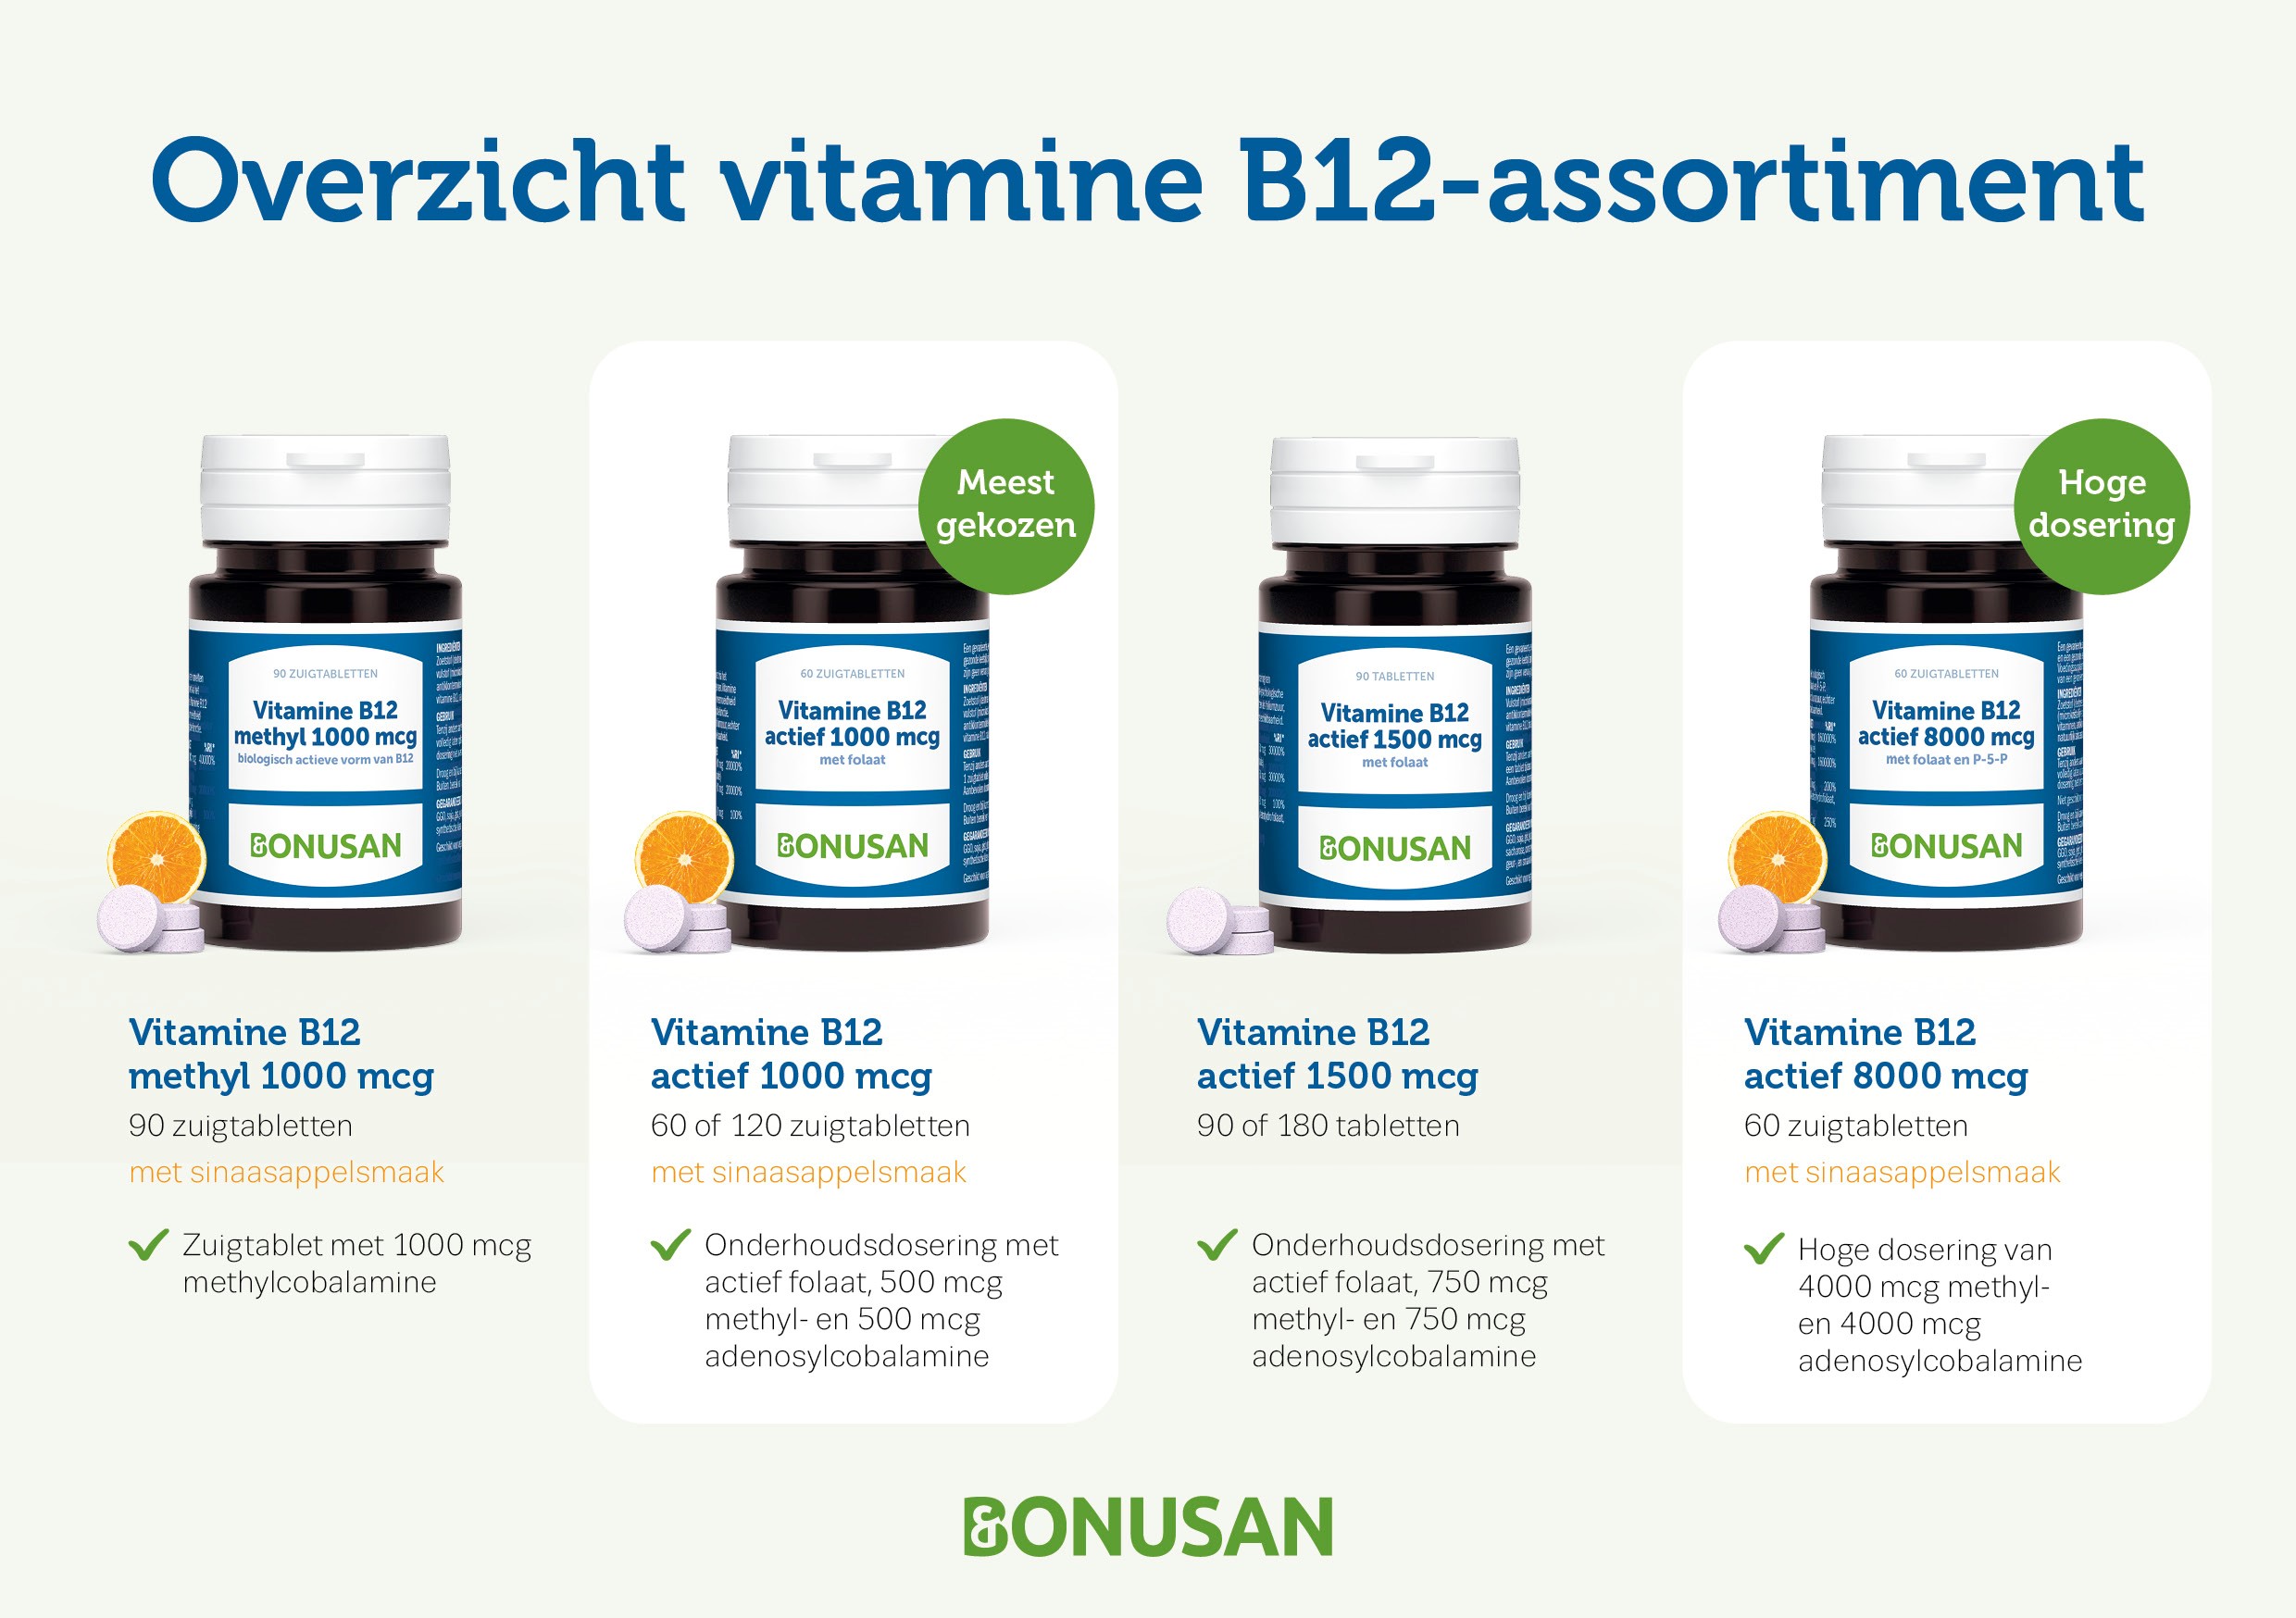 Vitamine B12 actief 1500 mcg